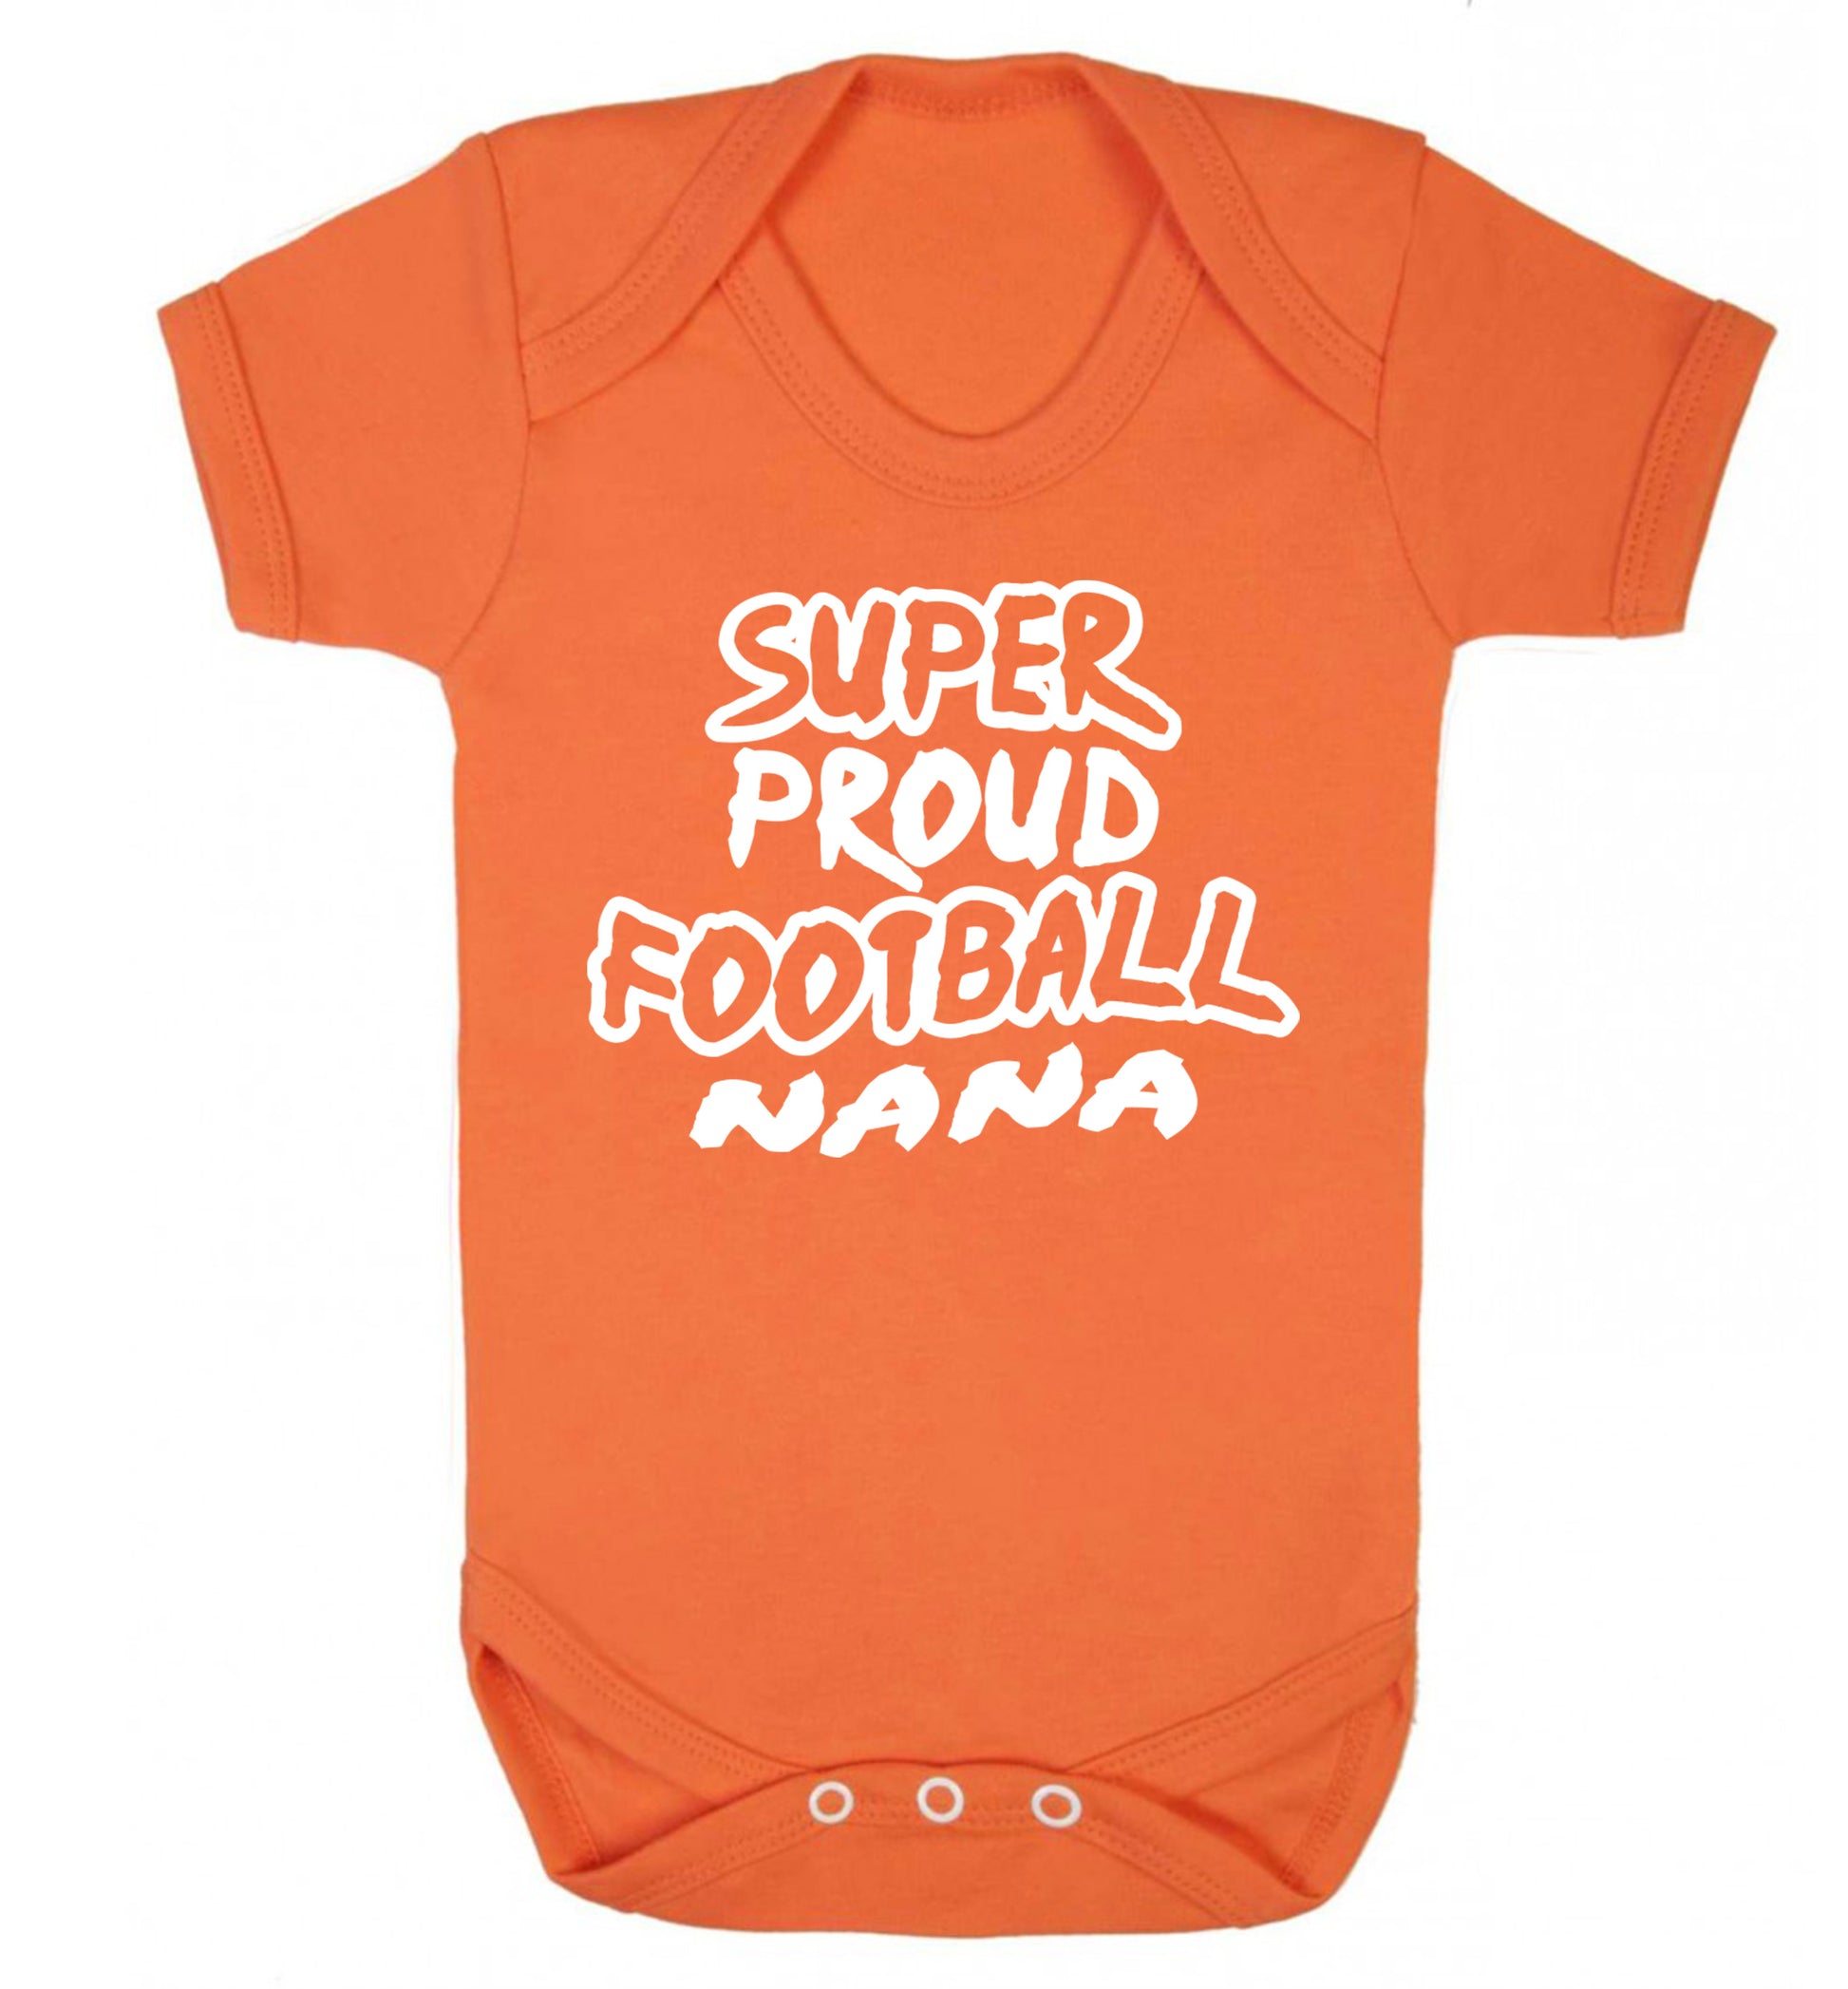 Super proud football nana Baby Vest orange 18-24 months